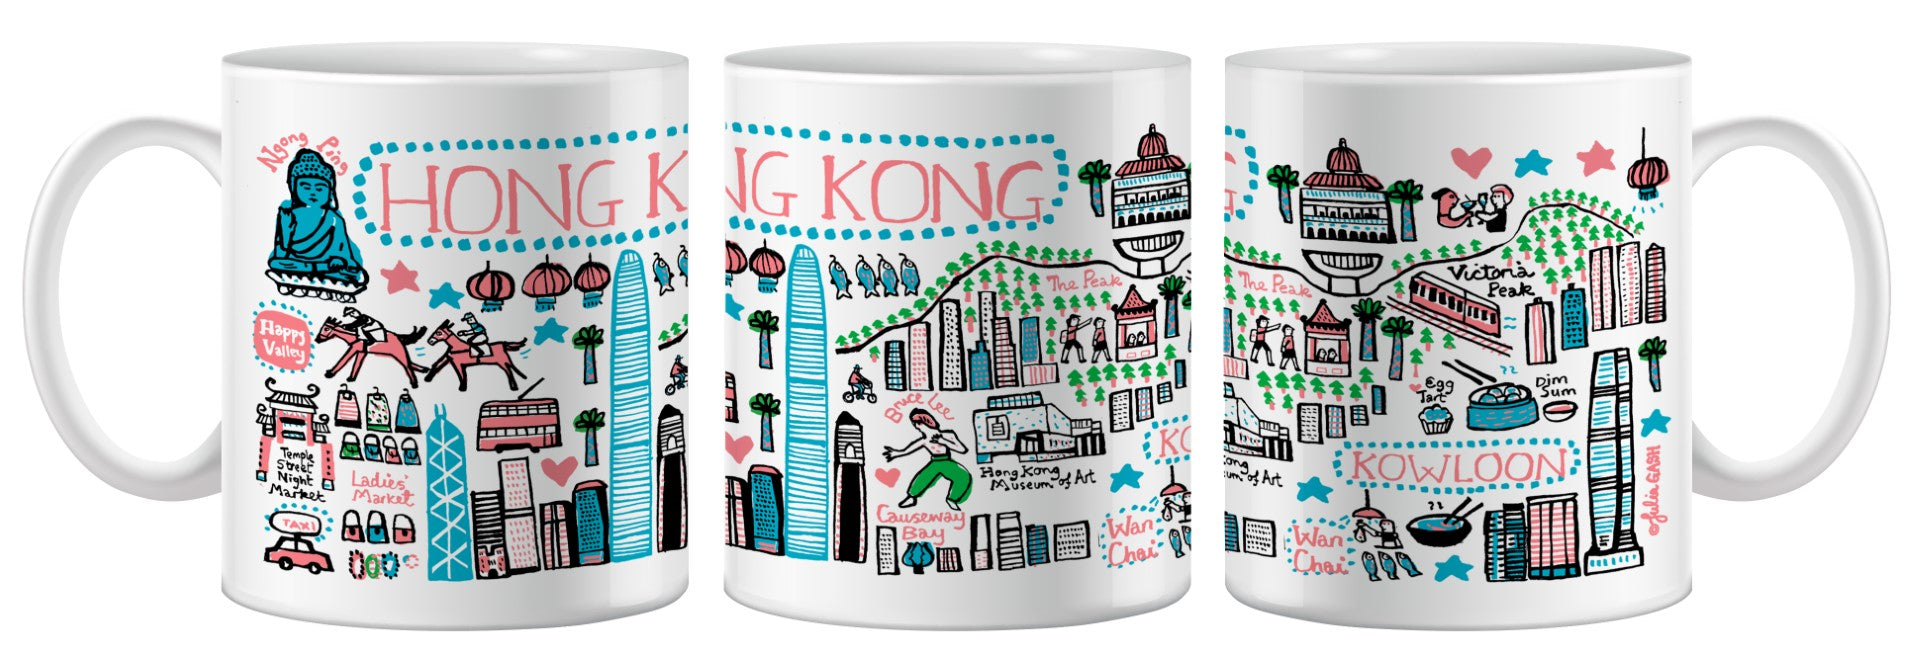 Retouch Hk Ceramic Mug | Bookazine HK